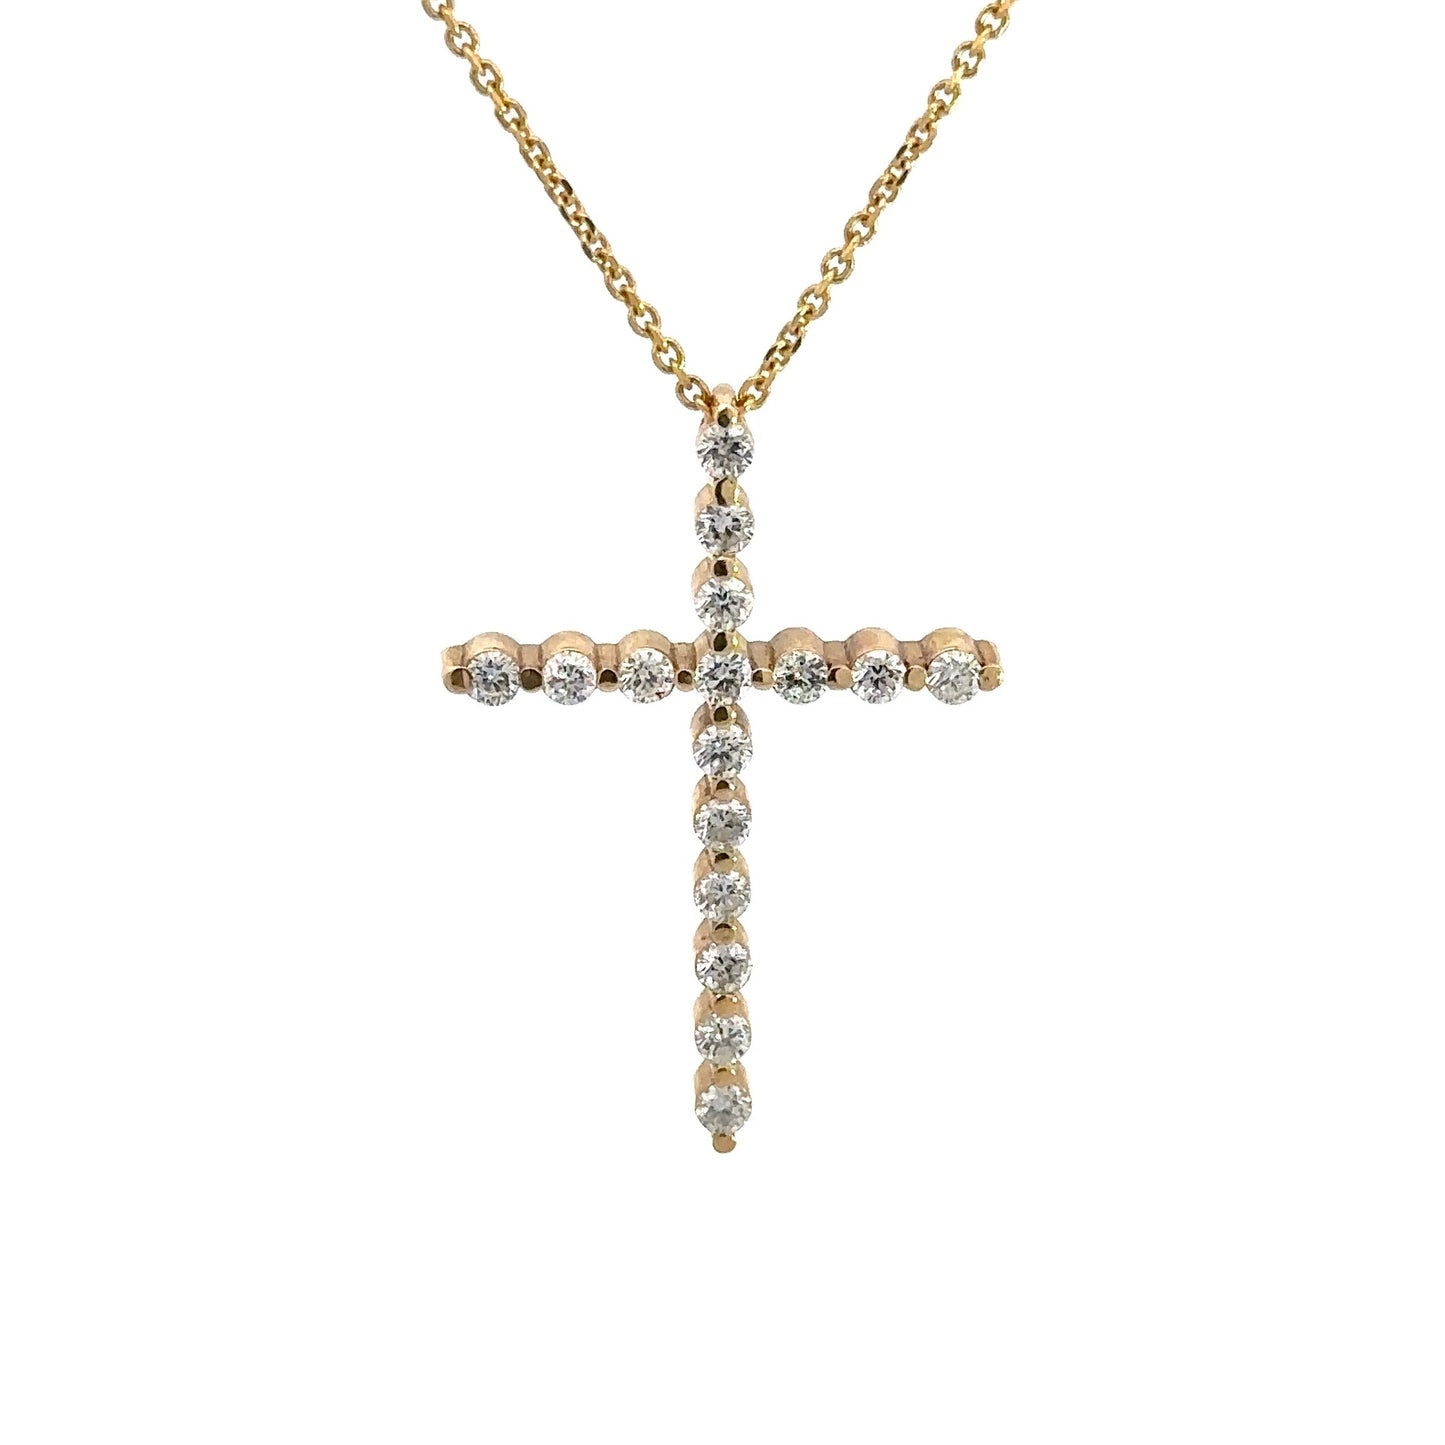 Front of diamond cross necklace with 16 round diamonds